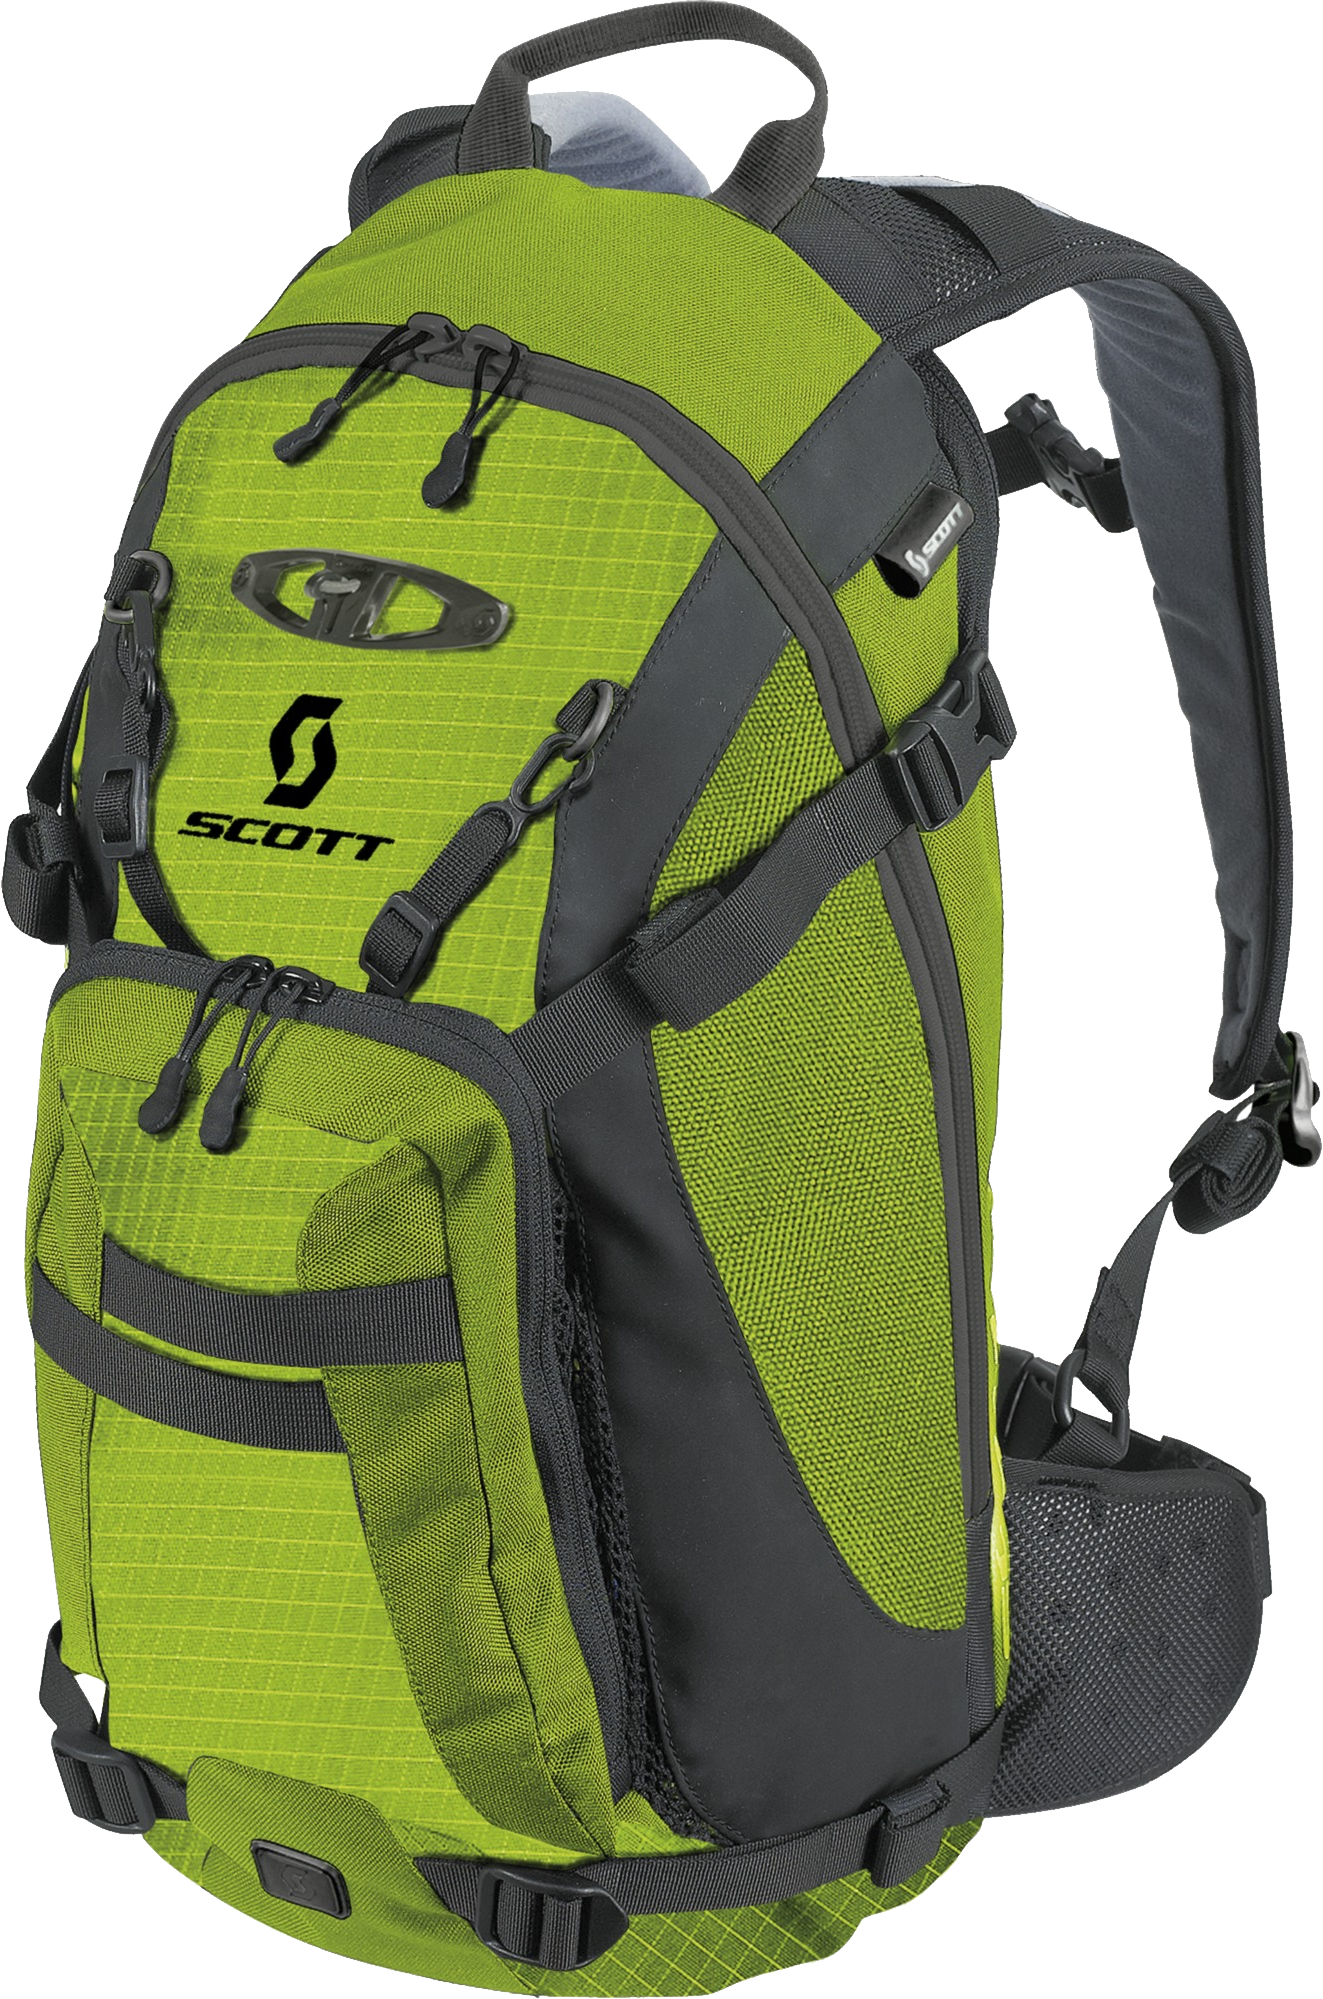 Sport Backpack Png Image - Backpack, Transparent background PNG HD thumbnail